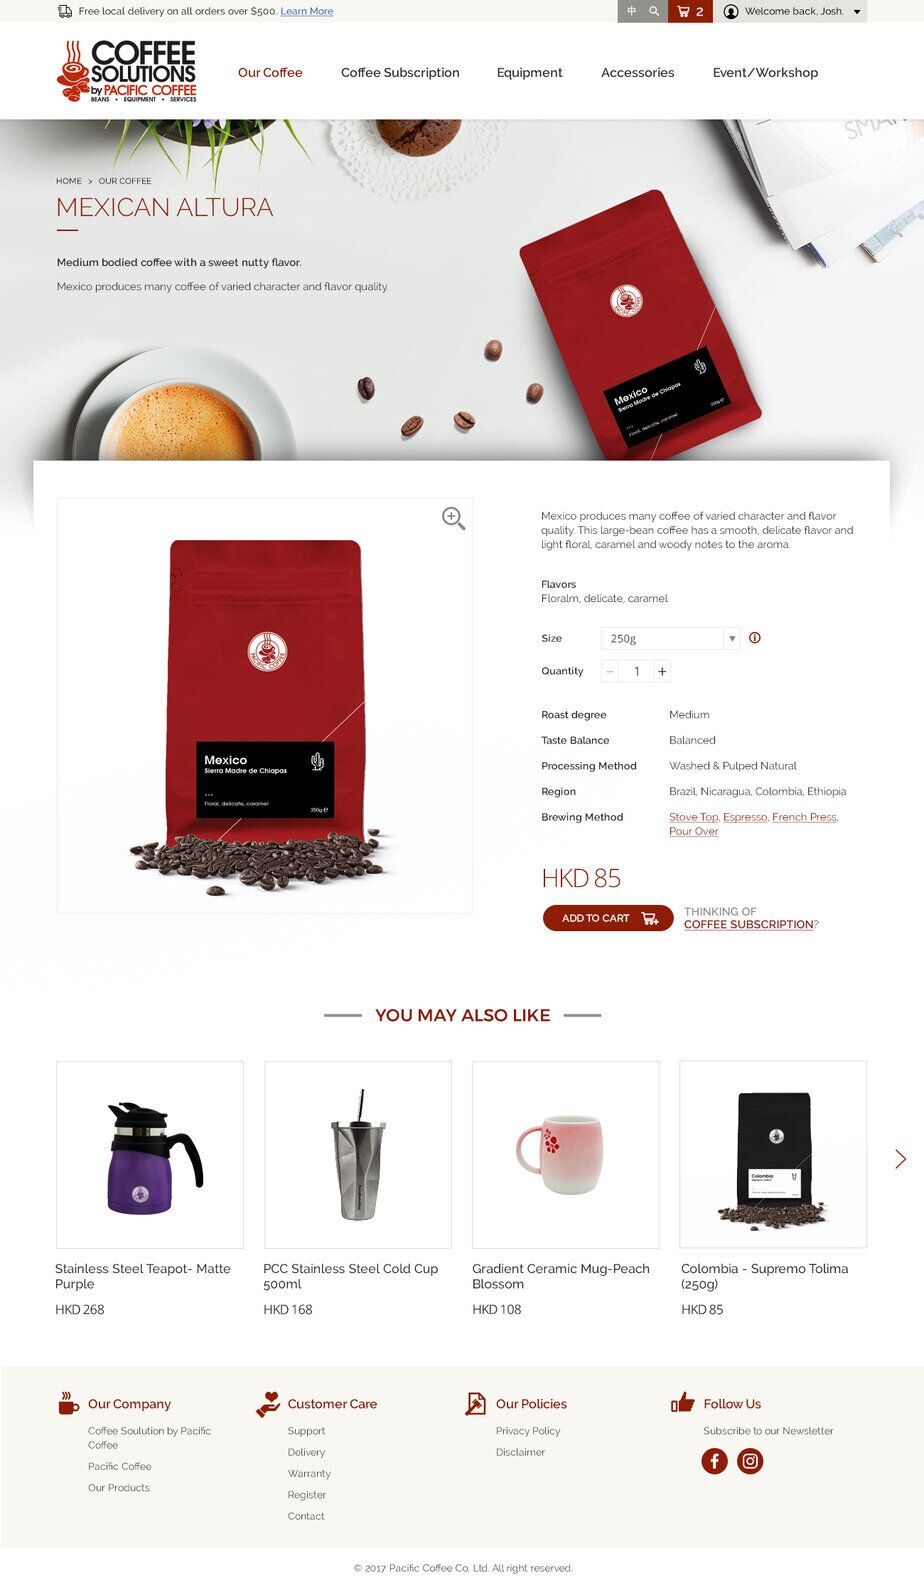 Pacific Coffee website screenshot for desktop version 4 of 6